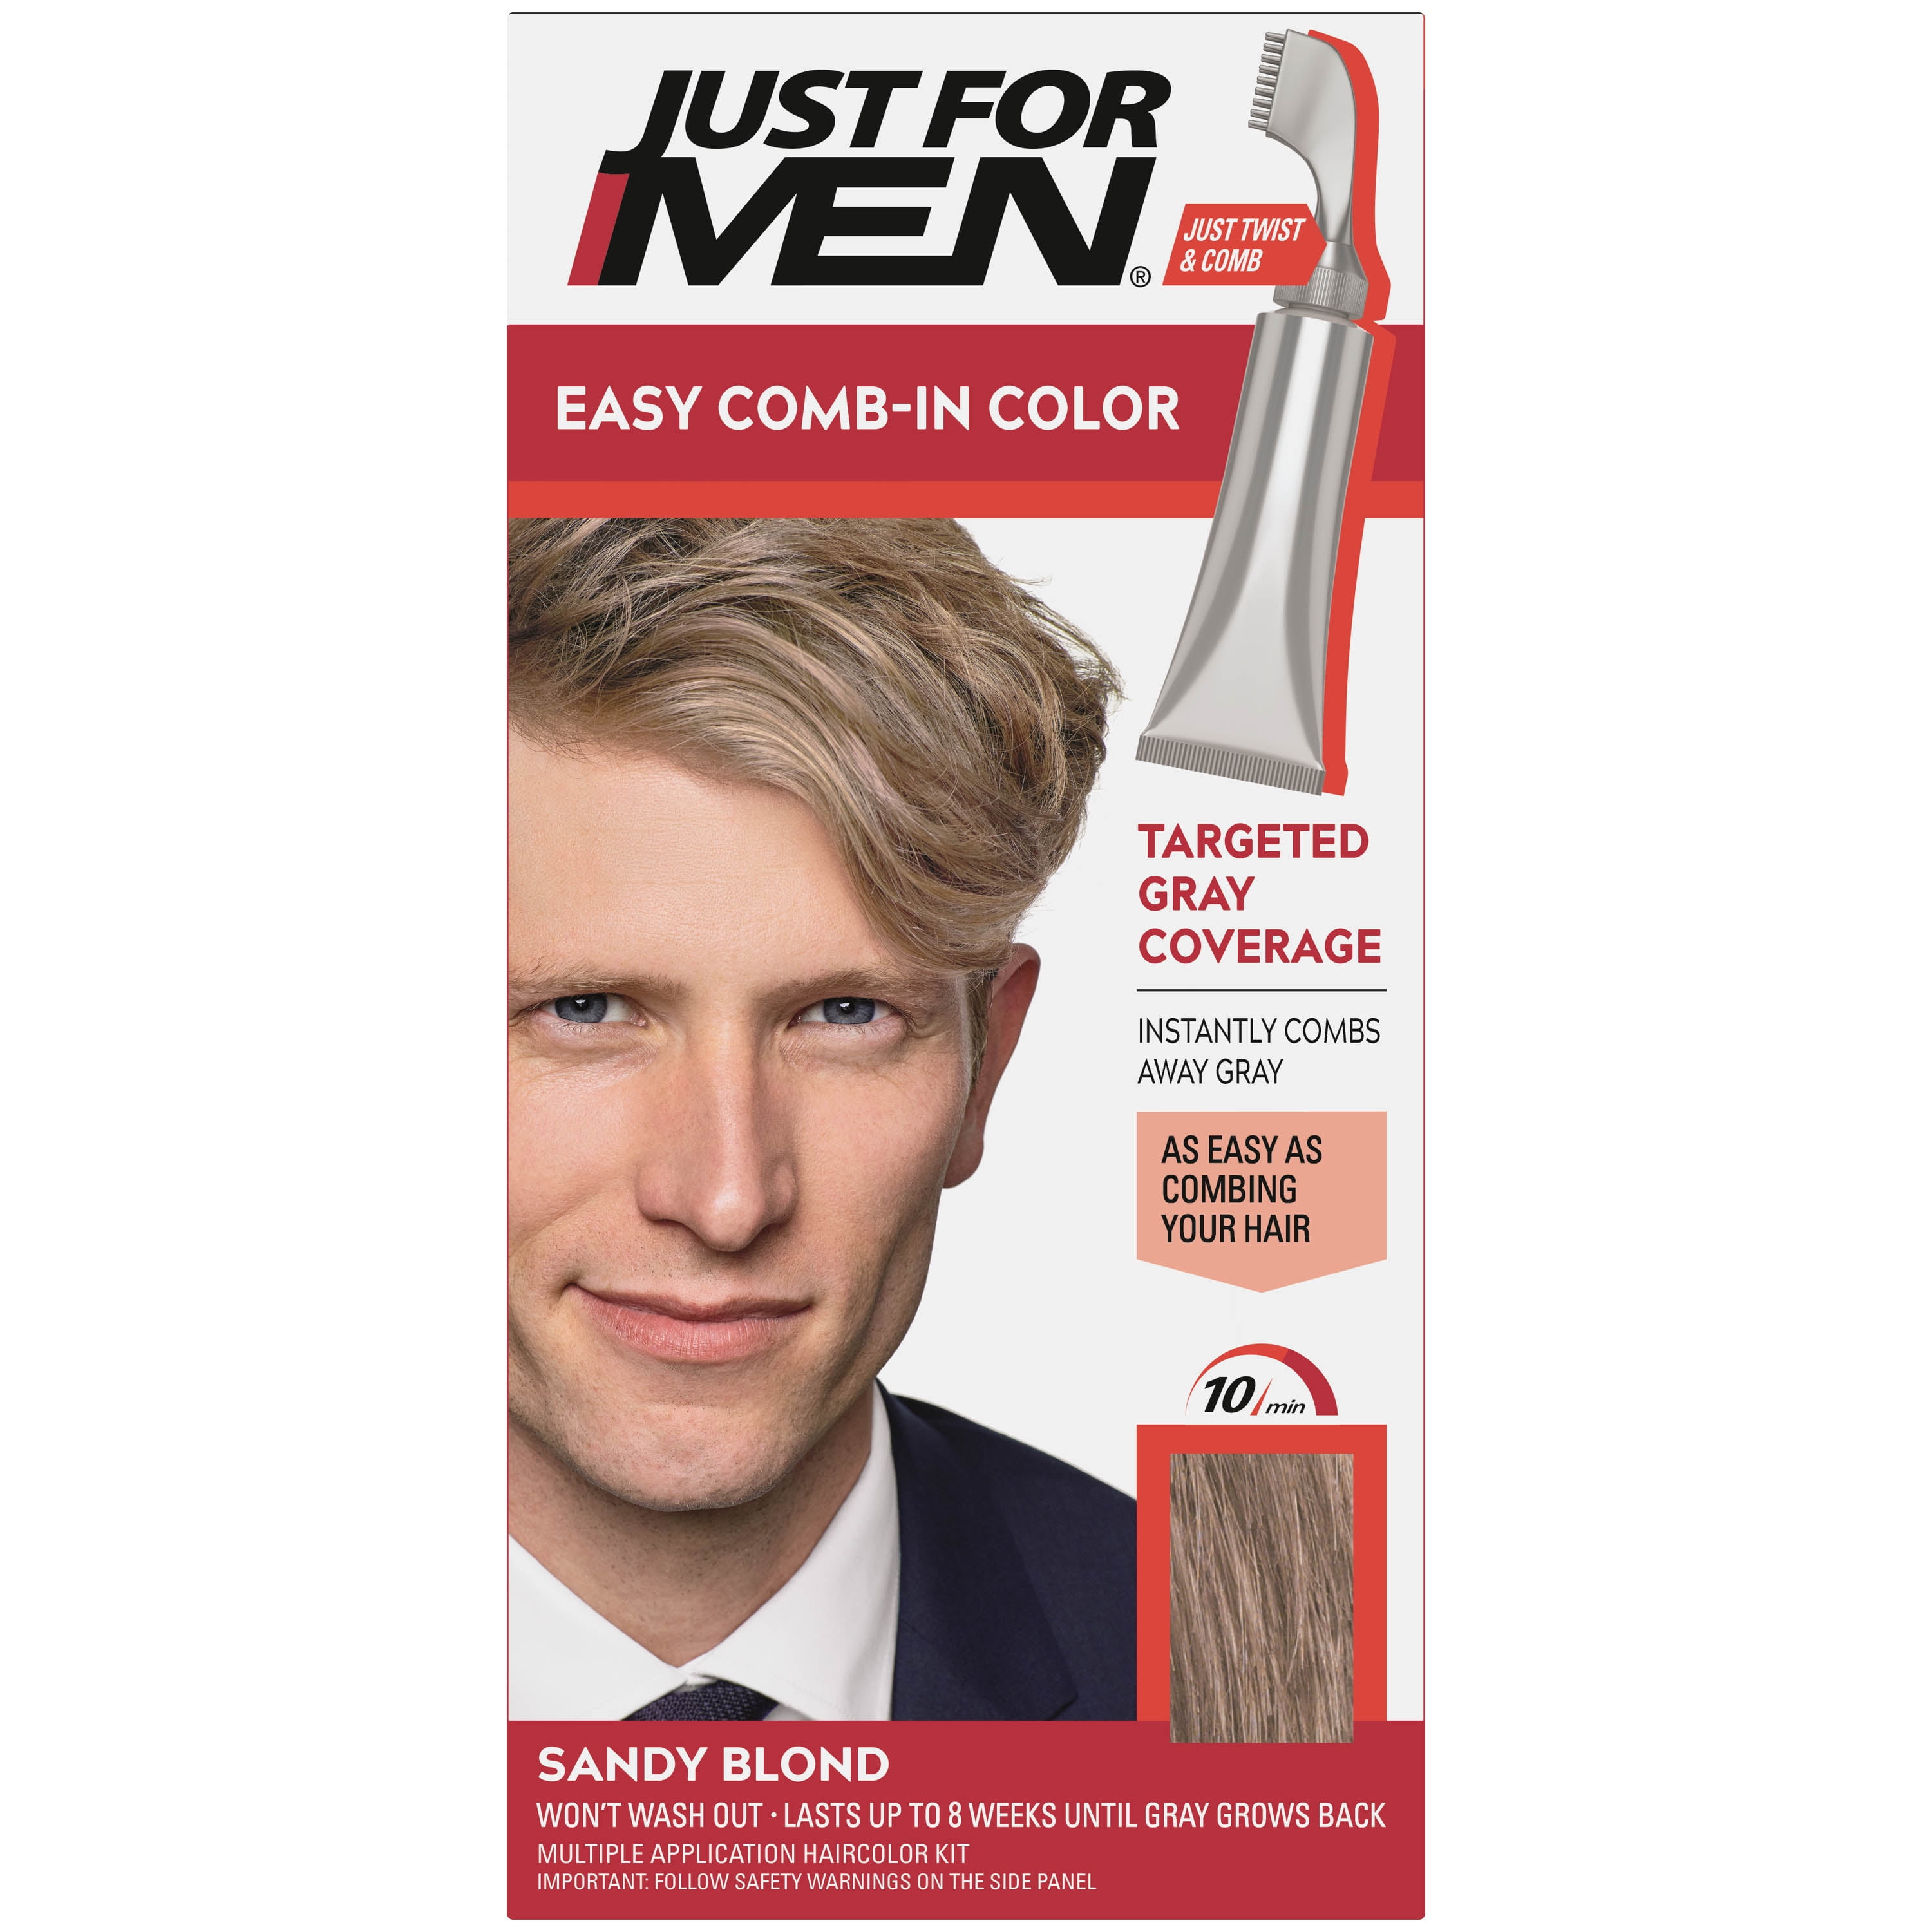 Buy Just For Men Hair Colour H-10 Blonde Online at Chemist Warehouse®